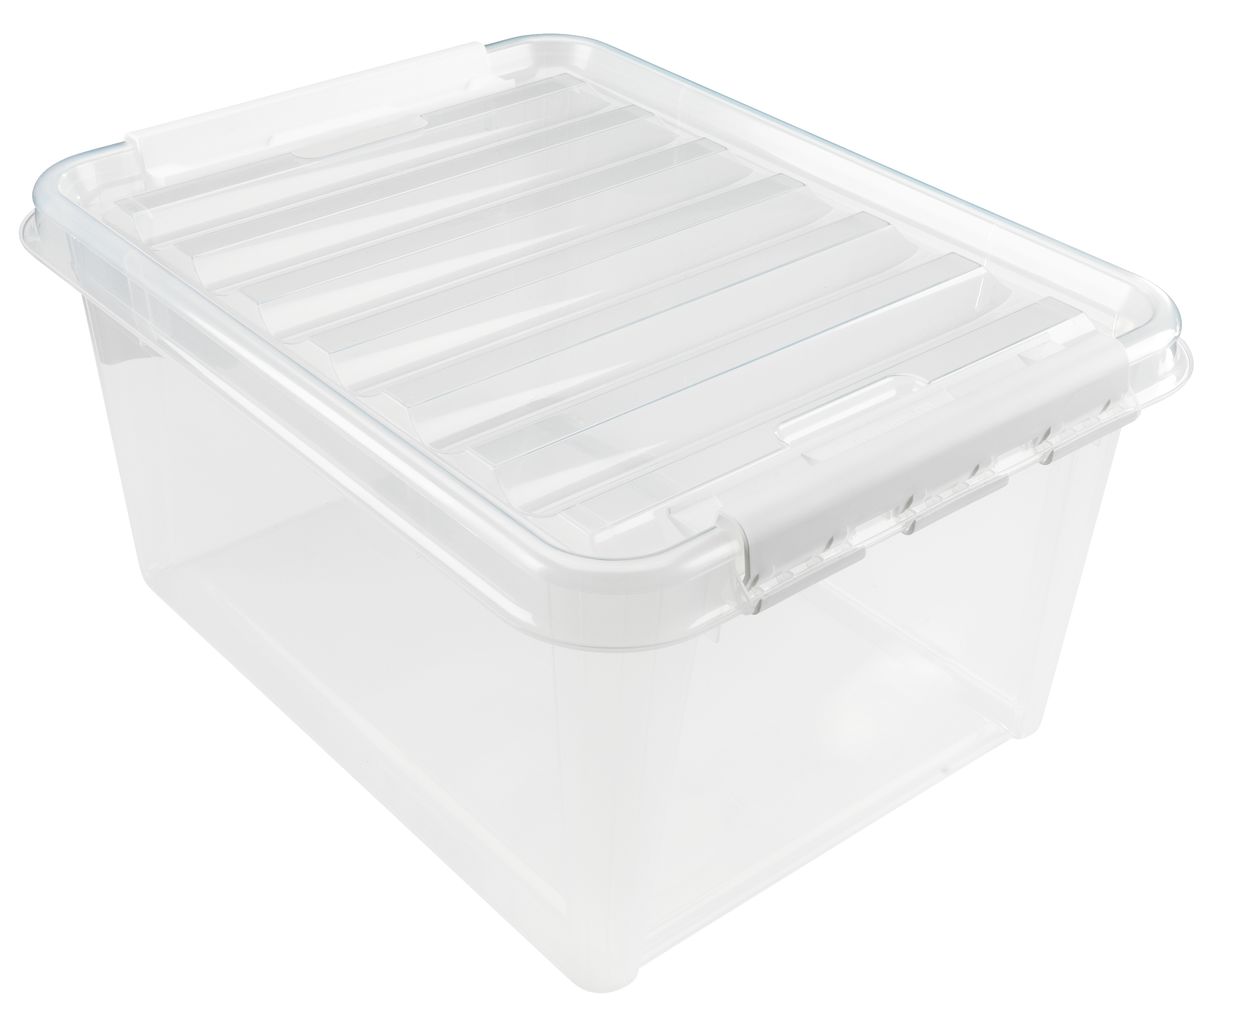 5 Five Simply Smart Plastic Storage Box with Lid Beige 31x31x31cm S7902138  1pcs